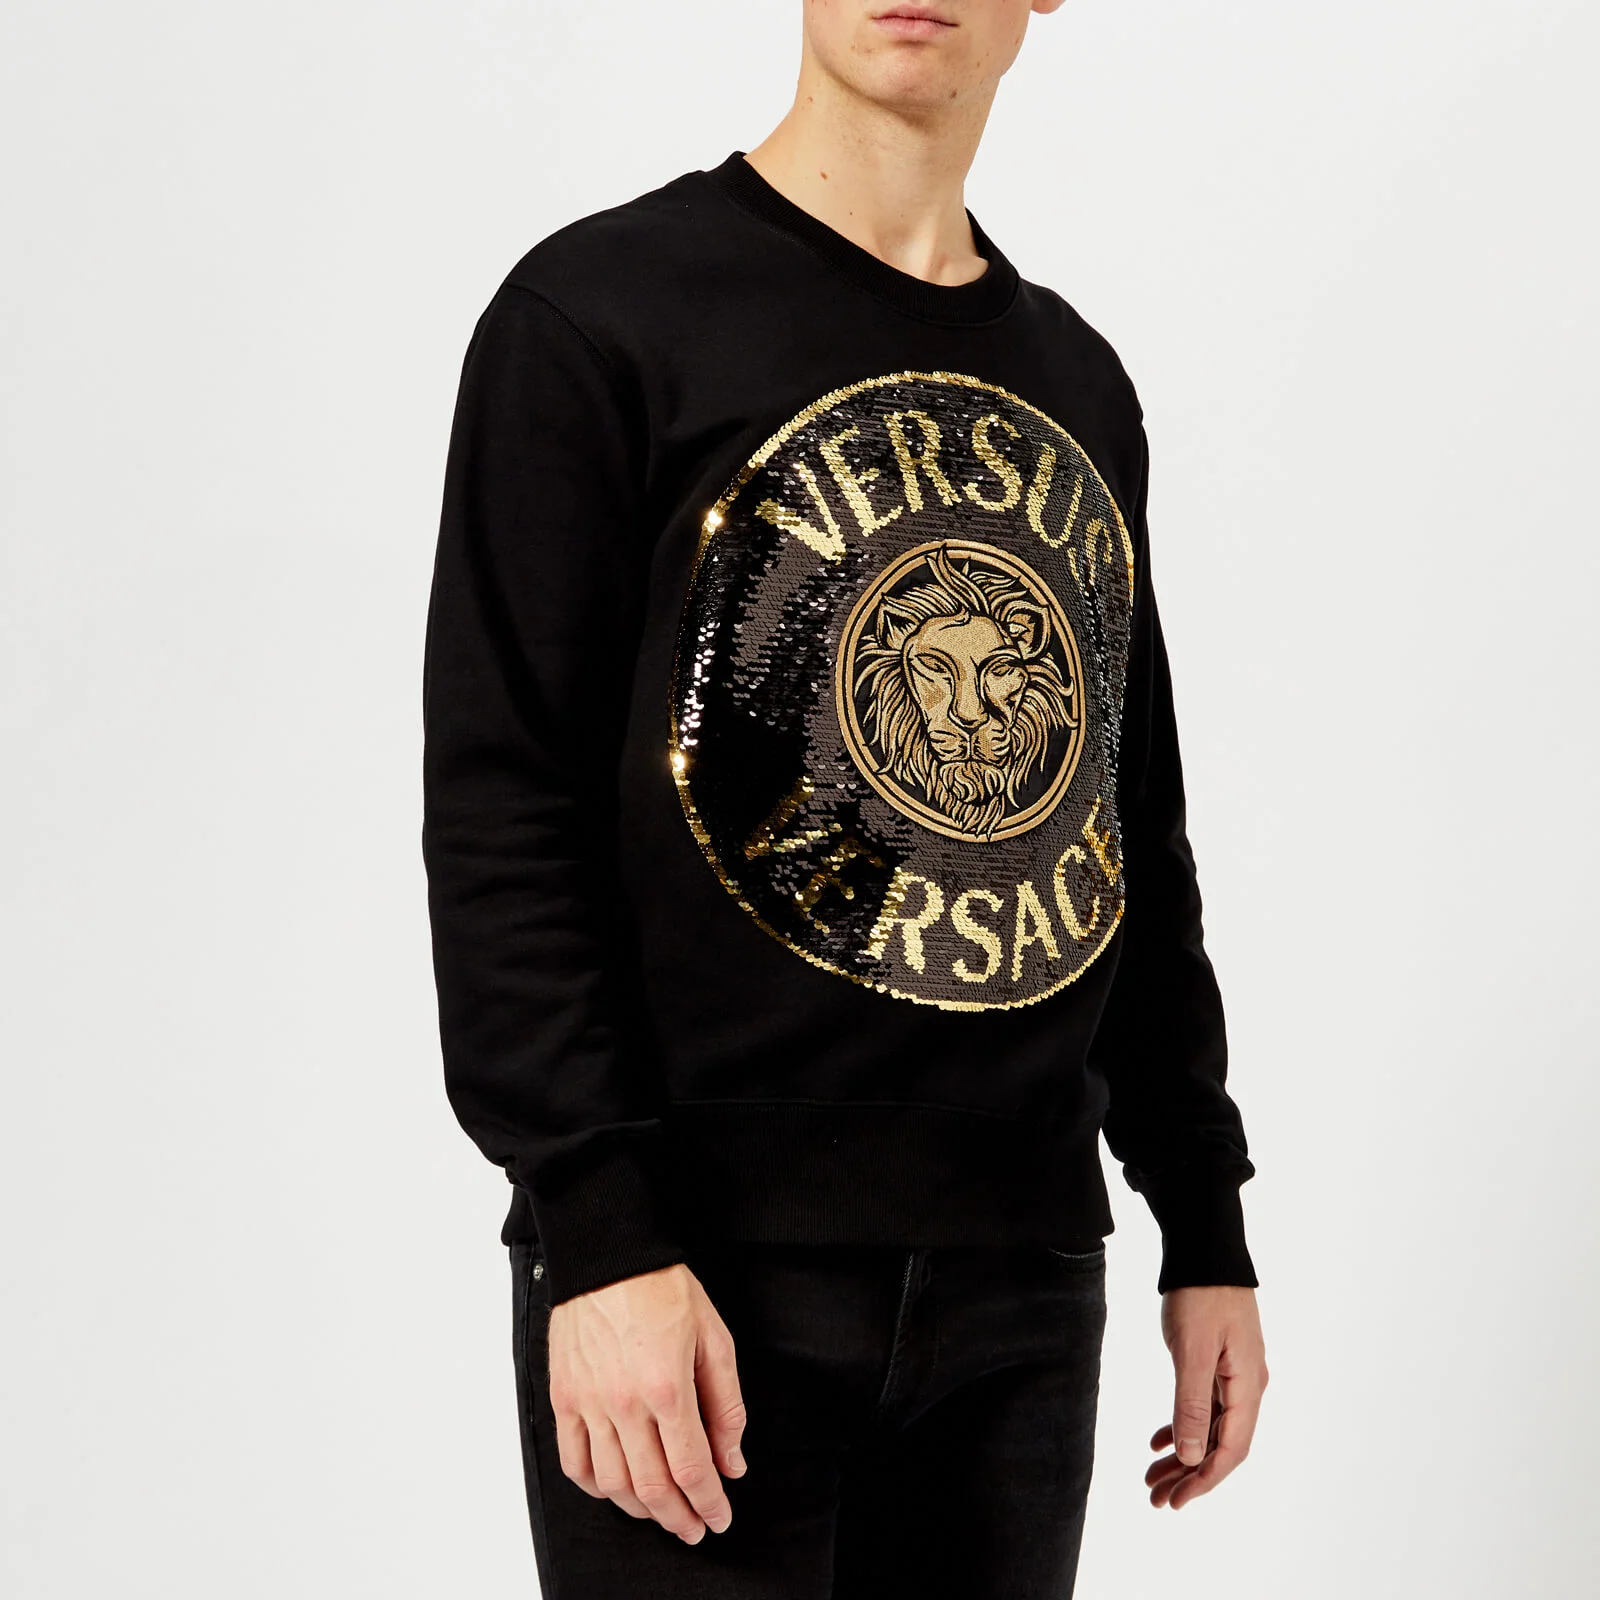 Versus Versace Men's Round Logo Sweatshirt - Black/Gold Image 1